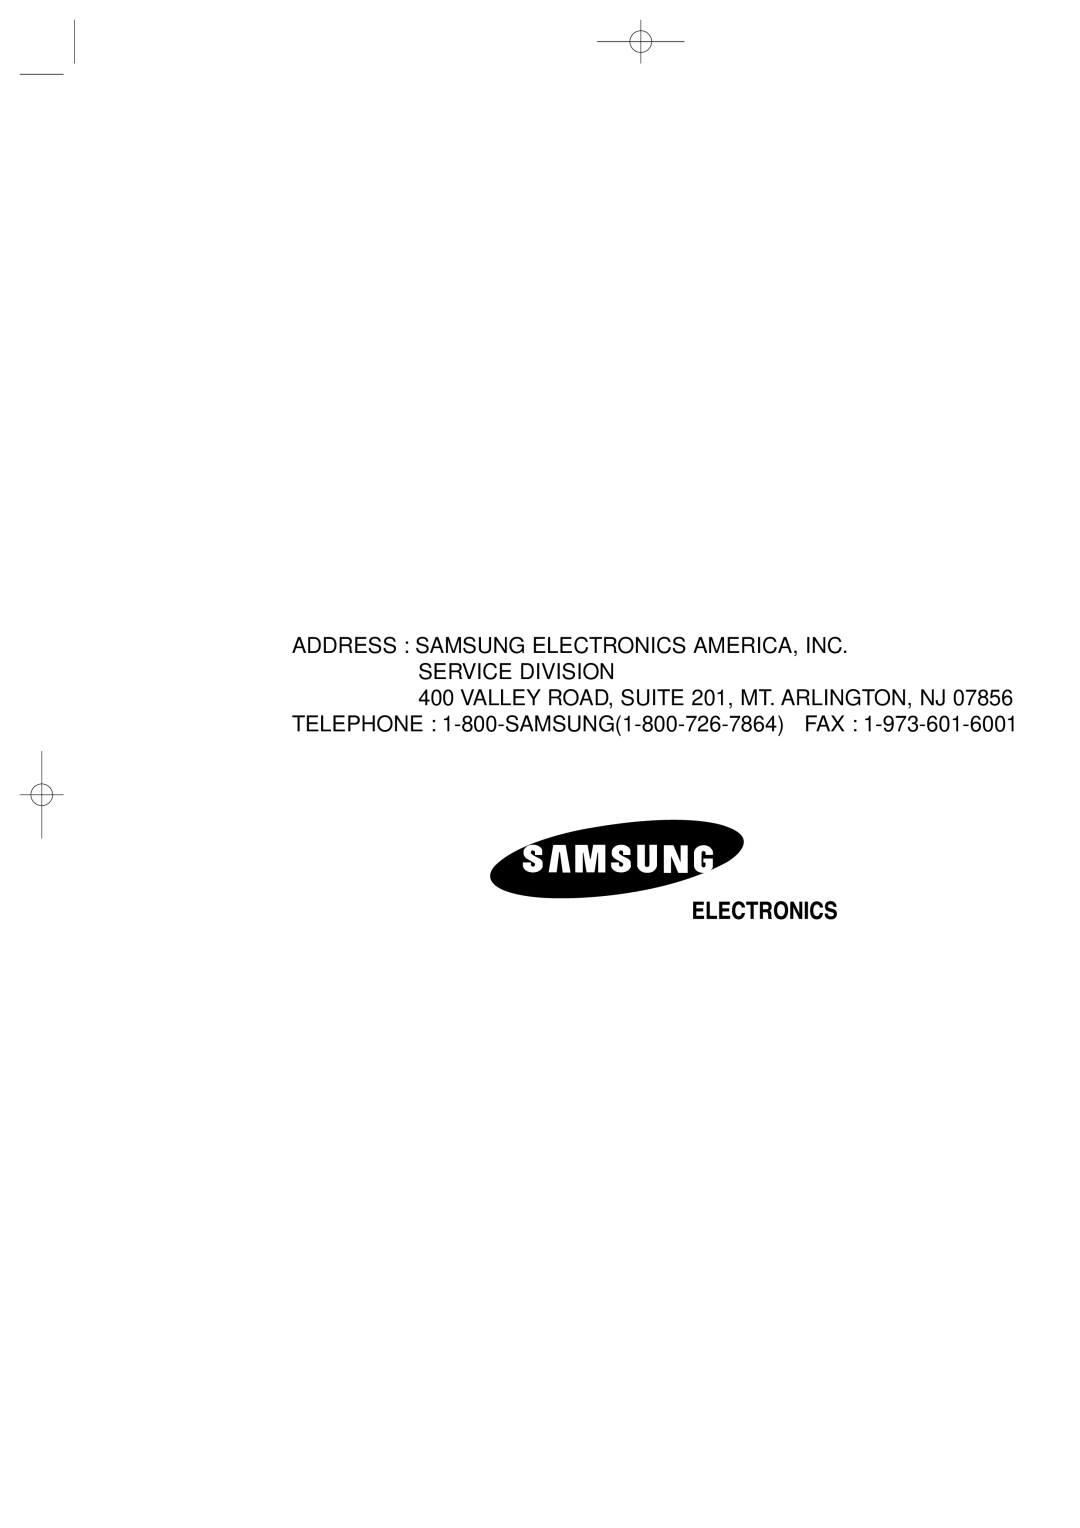 Samsung RS2577SL, RS2577SW Address Samsung Electronics America, Inc. Service Division, DA68-00500T12004.3.1.20359페PM이지32 